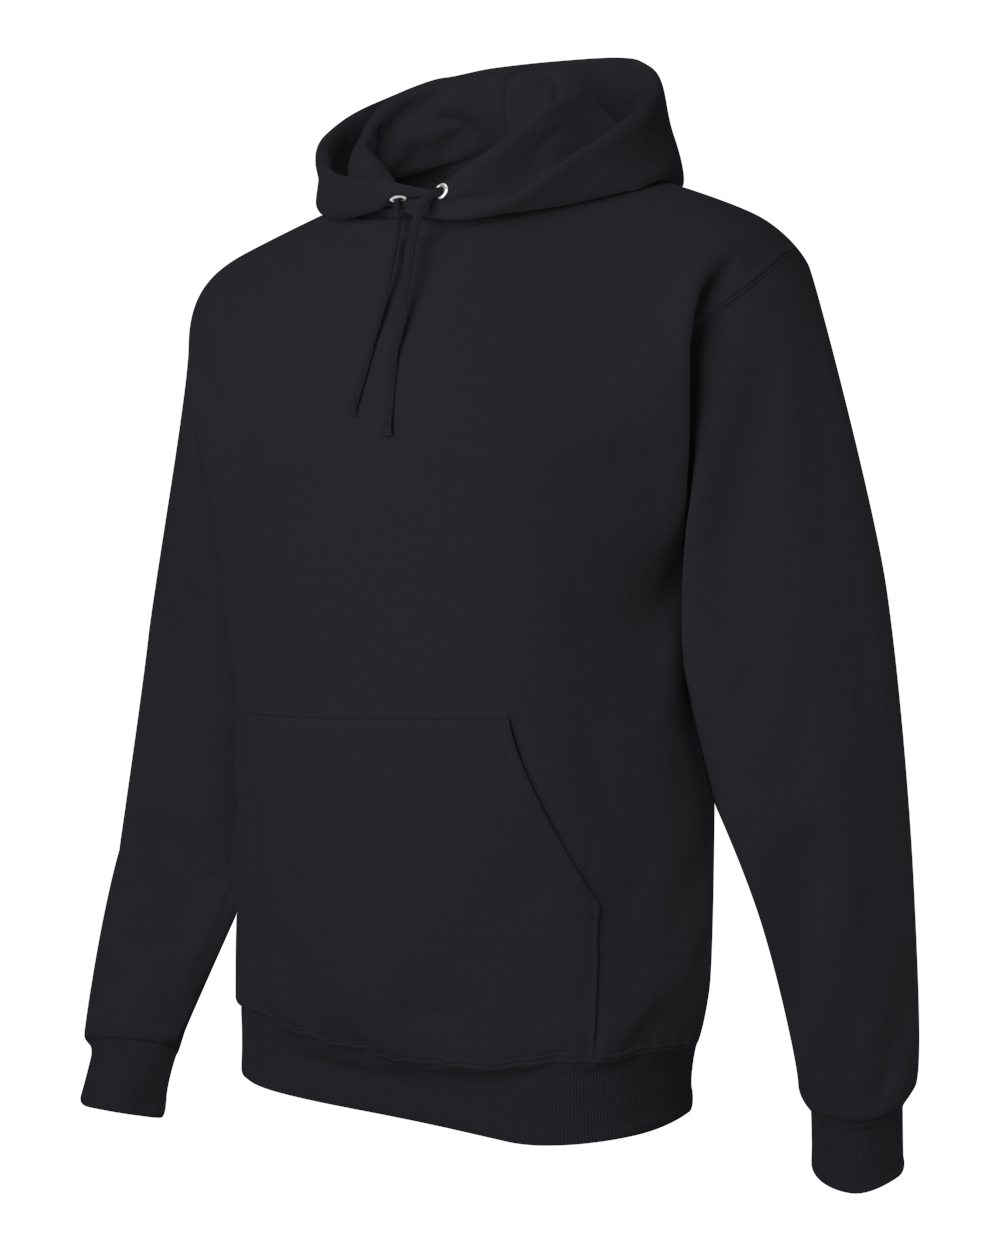 JERZEES 996MR - NuBlend Hooded Sweatshirt